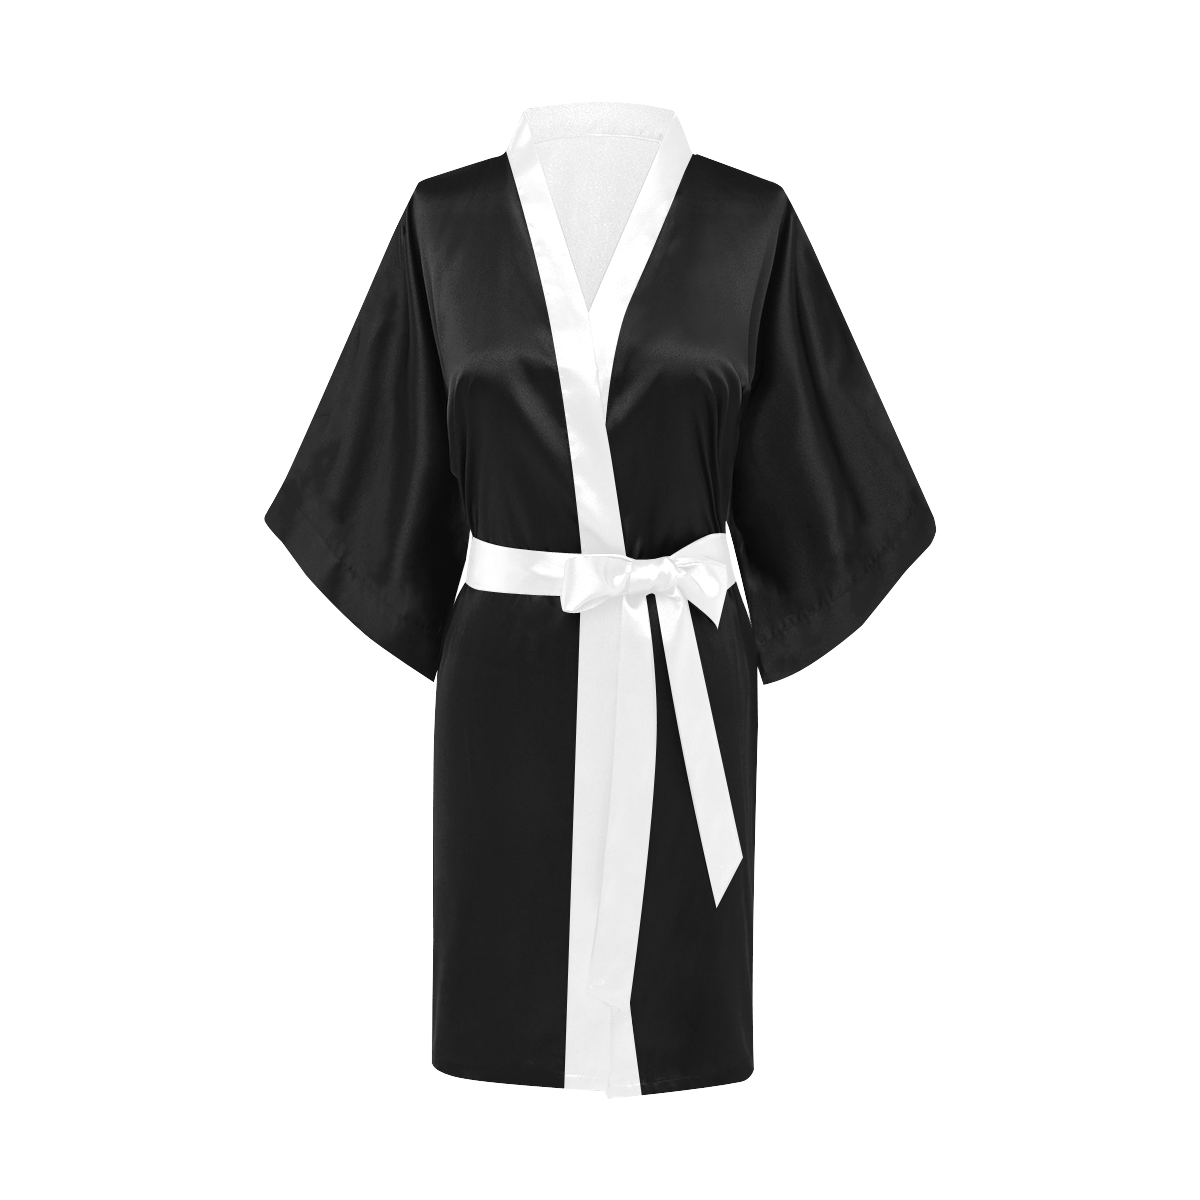 basic black 2 Kimono Robe